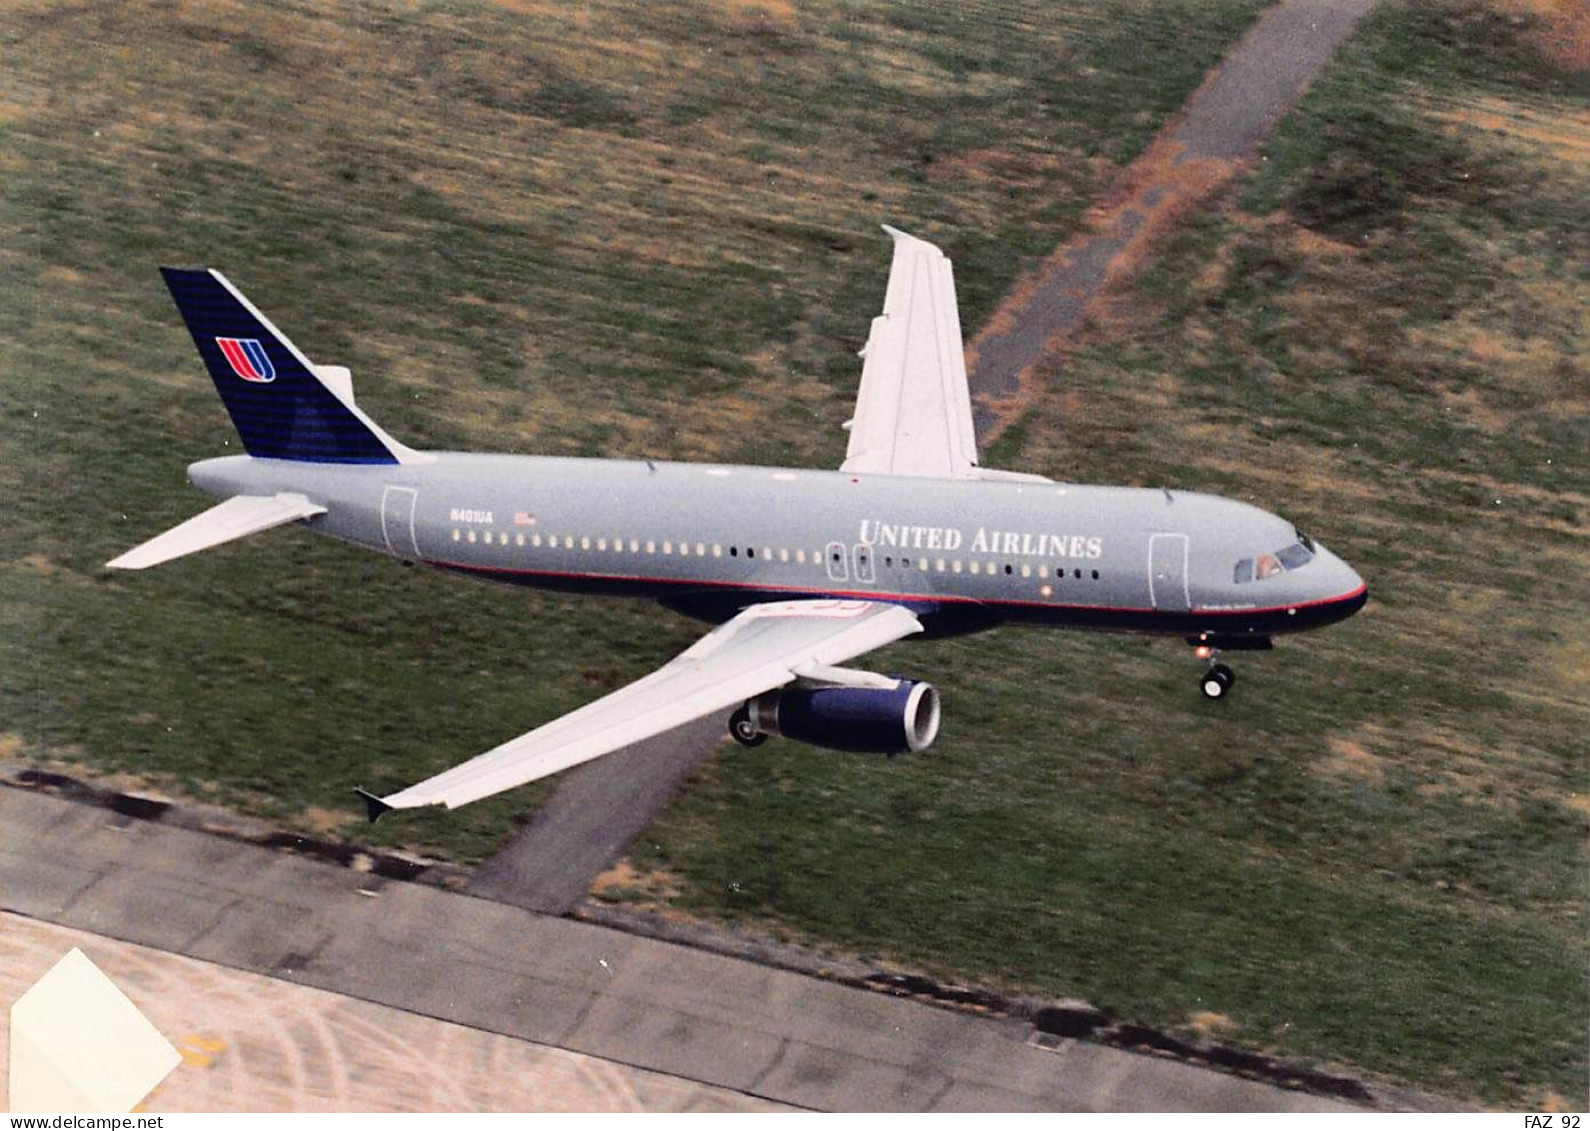 Airbus A320 - United Airlines - +/- 180 X 130 Mm. - Photo De Presse - Aviación